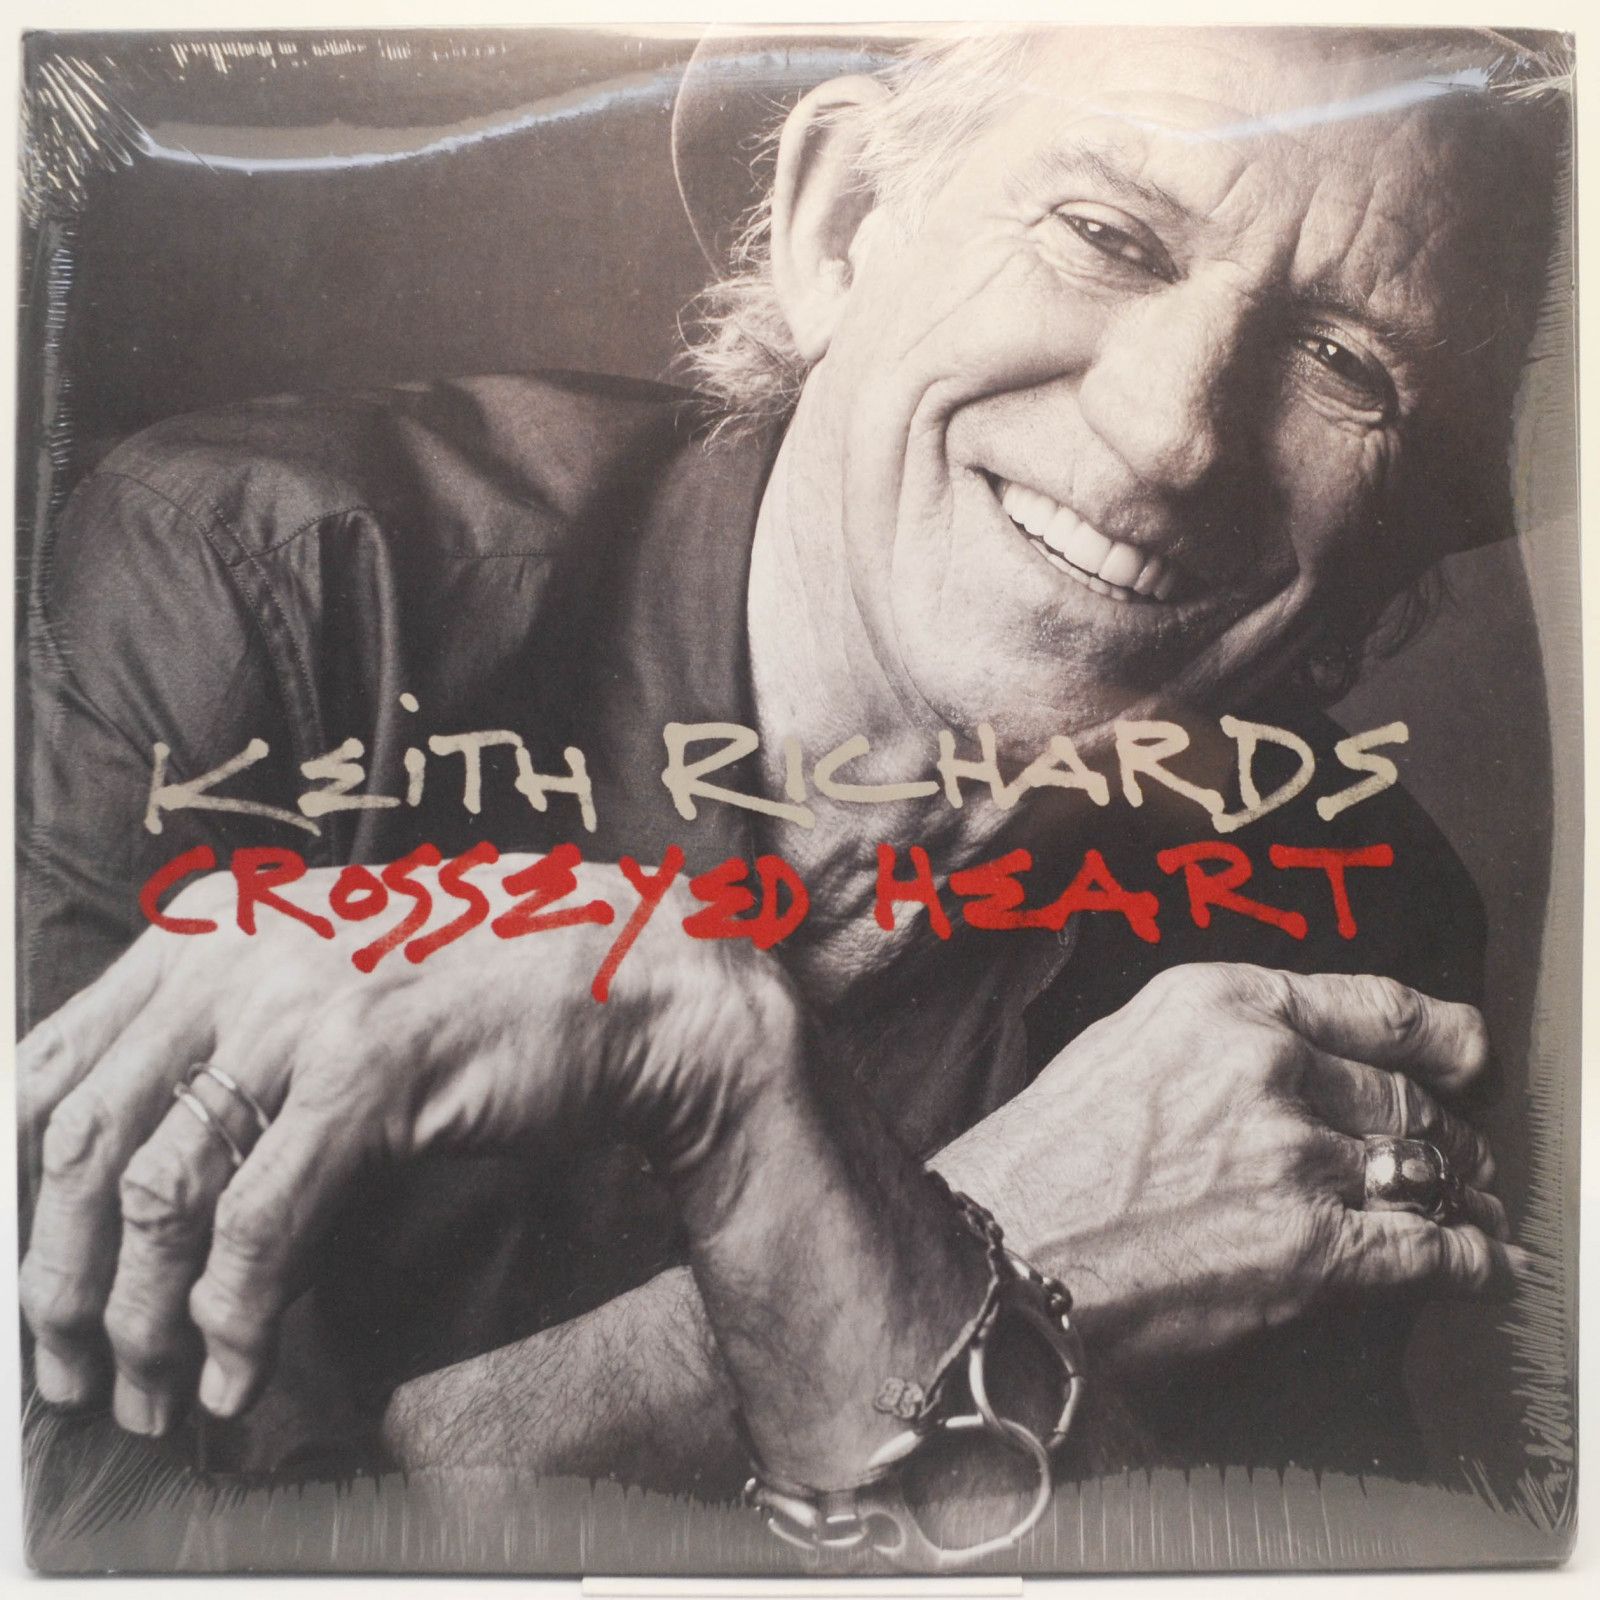 Keith Richards — Crosseyed Heart (2LP, USA), 2015